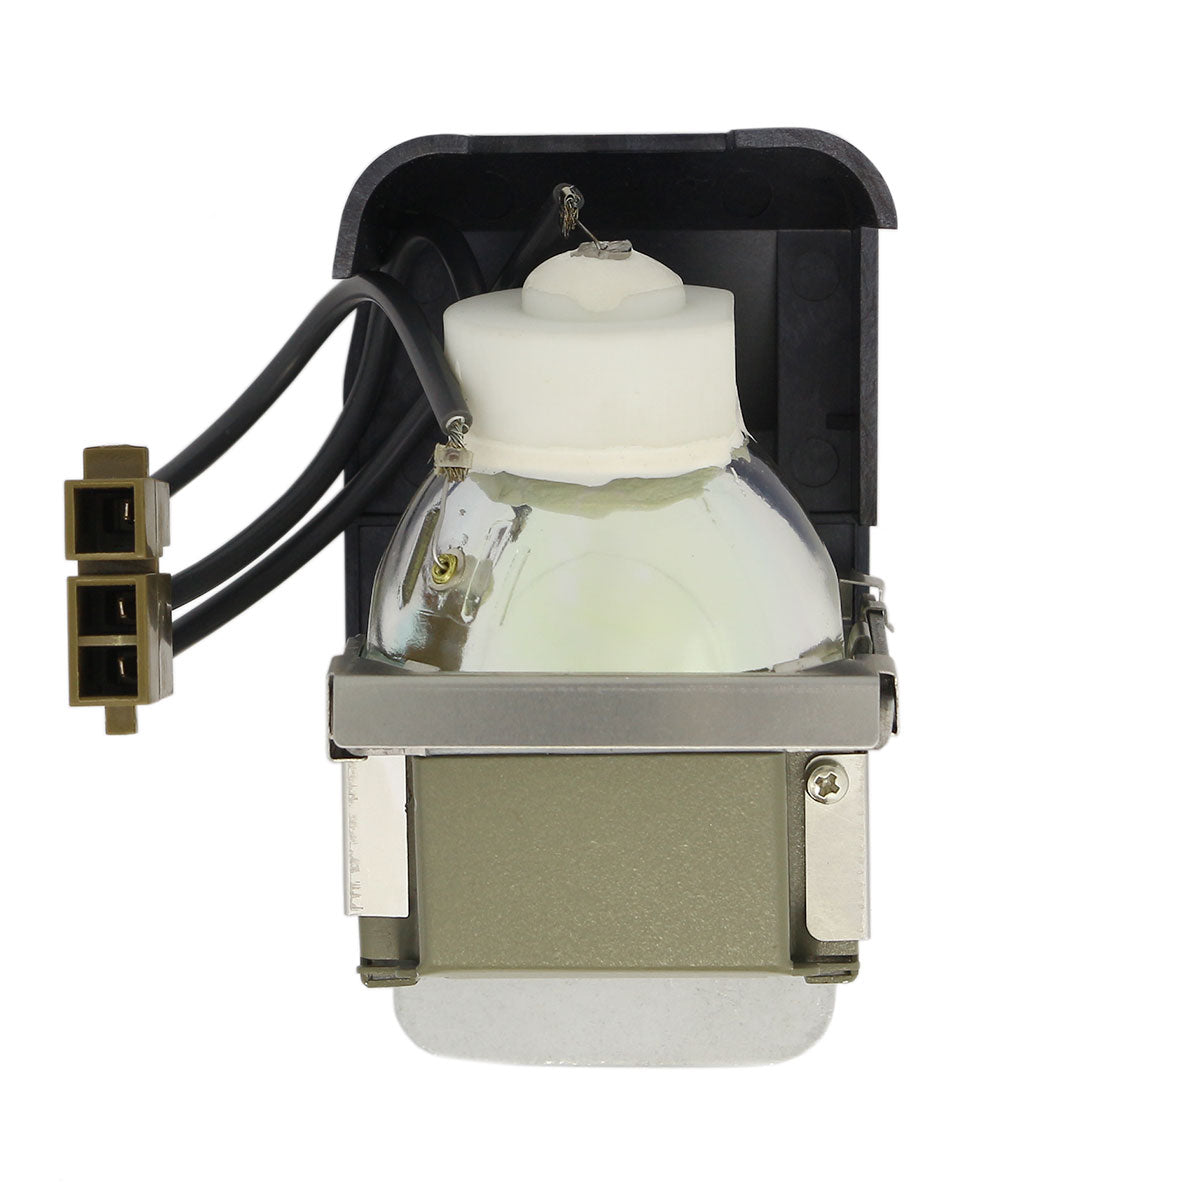 BenQ 5J.01201.001 Ushio Projector Lamp Module